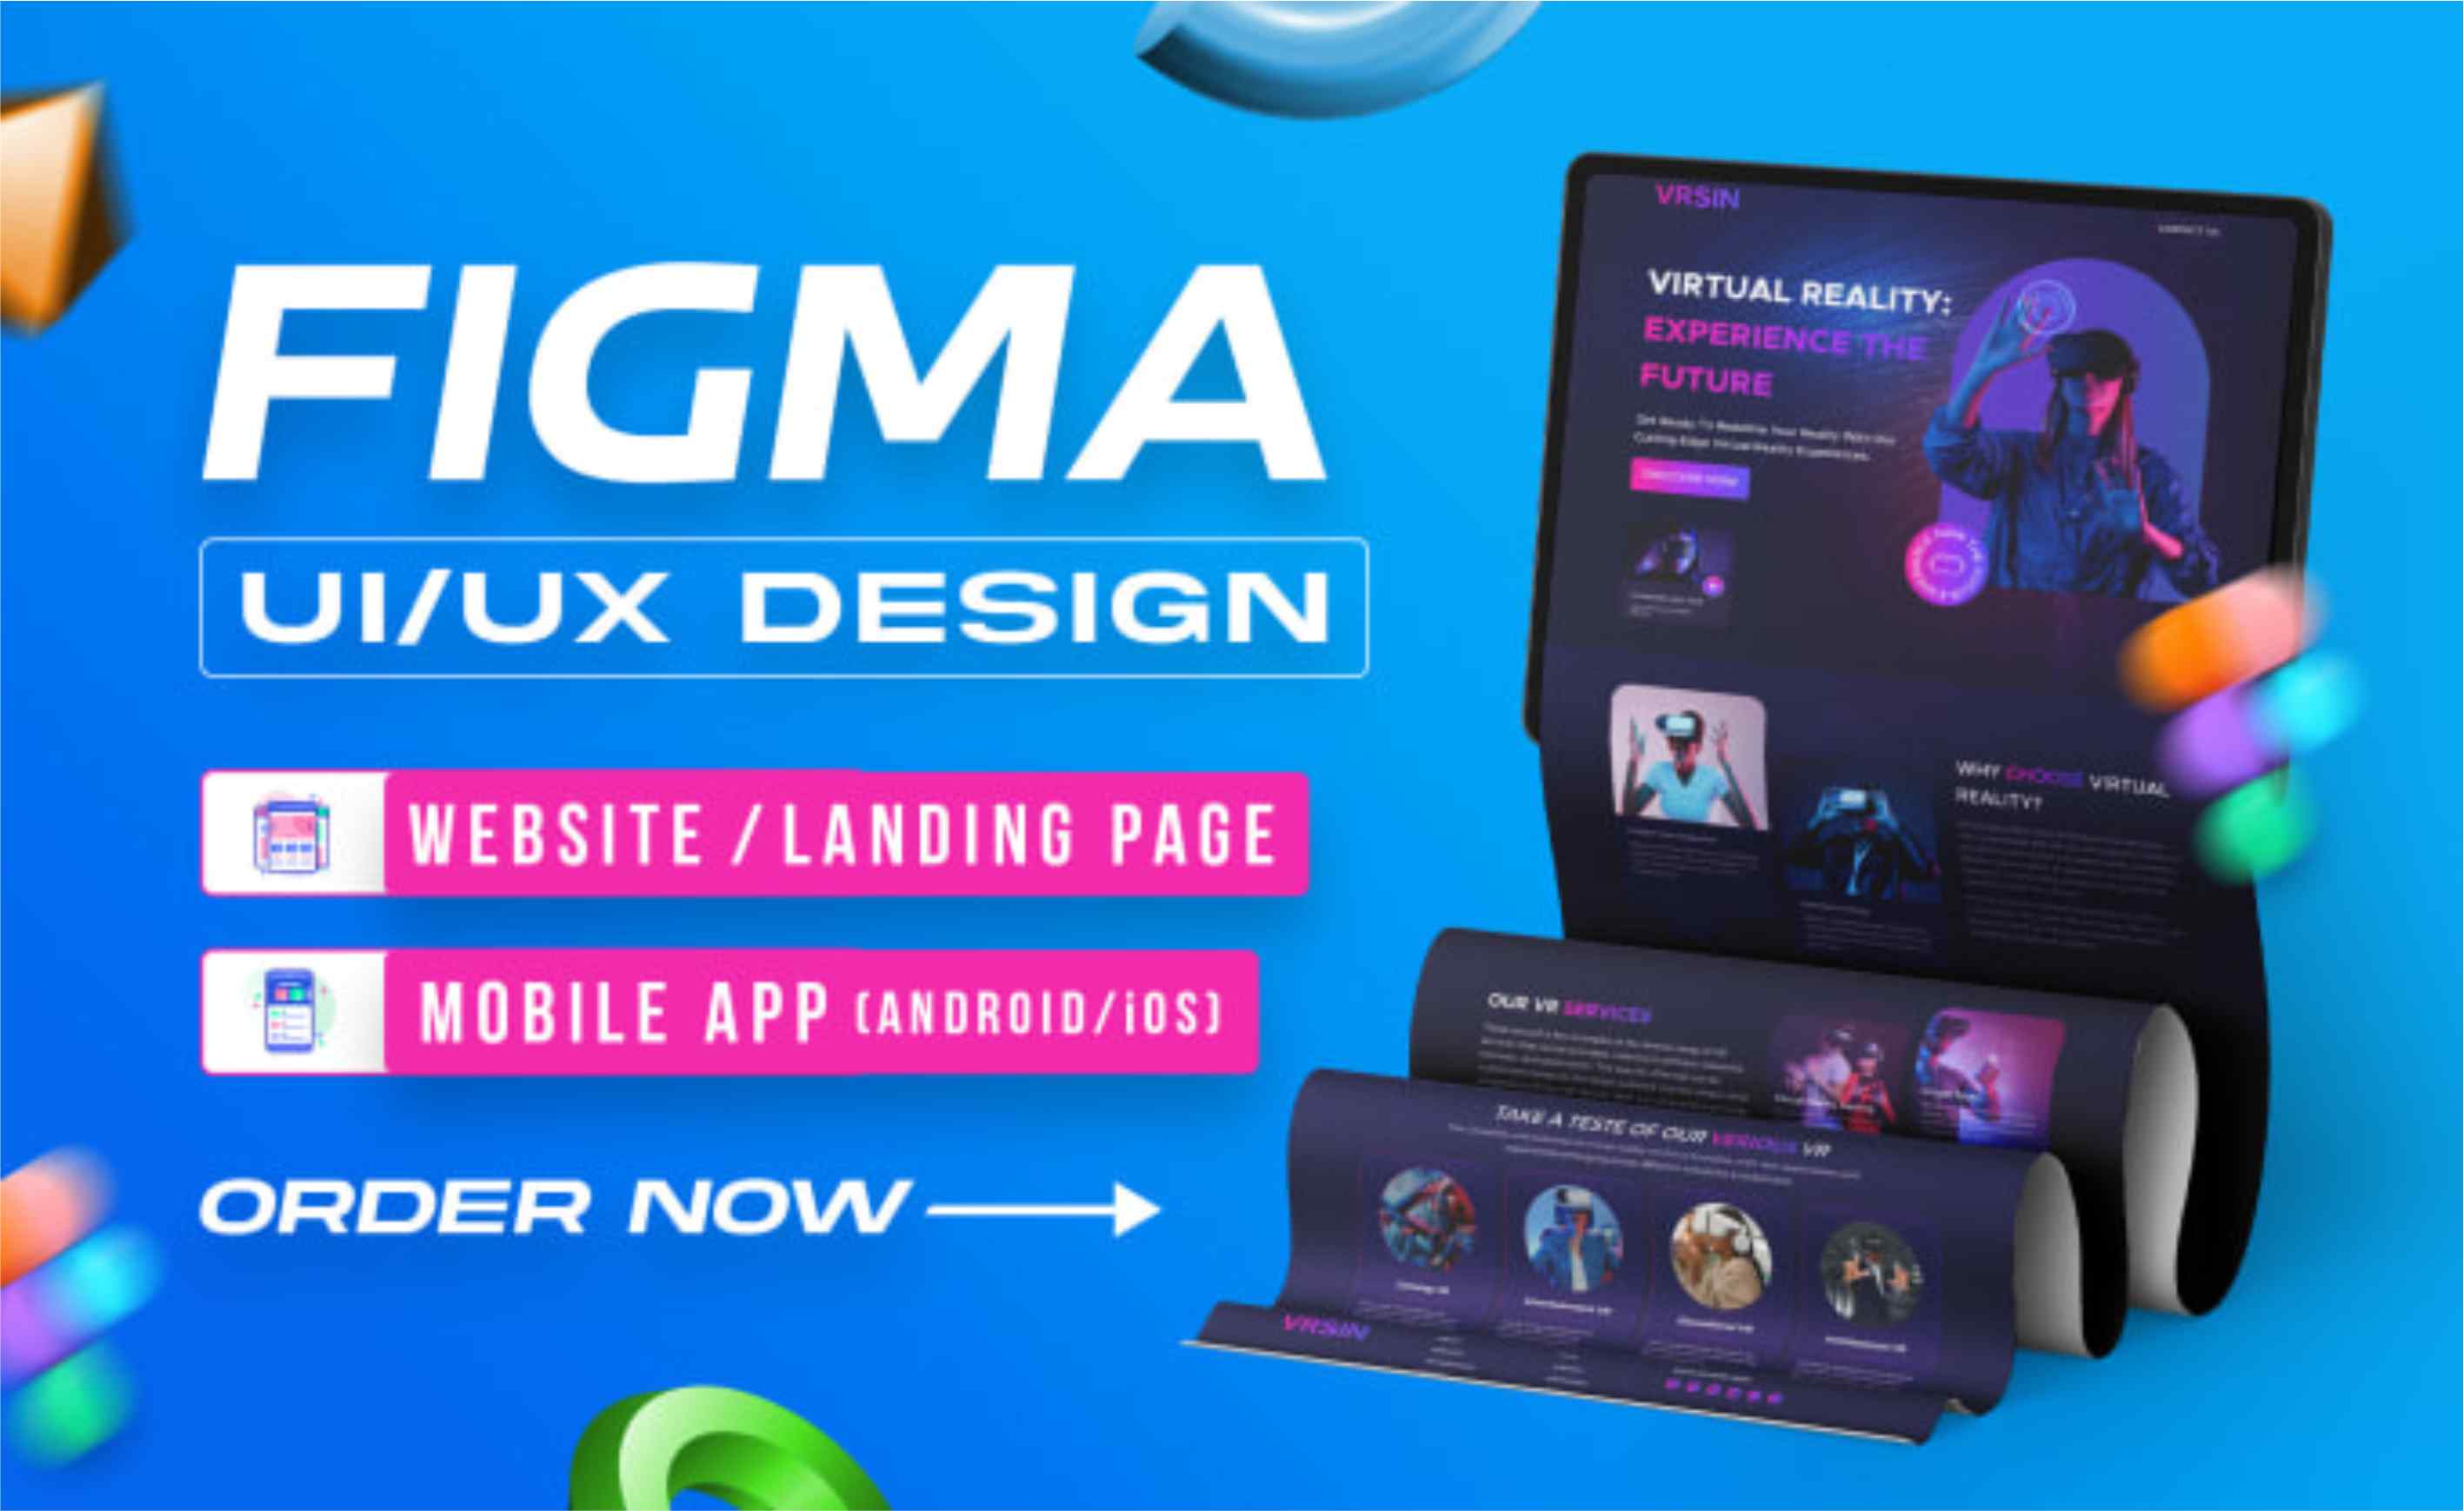 I will do website ui ux, landing page design, mobile app ui design in figma